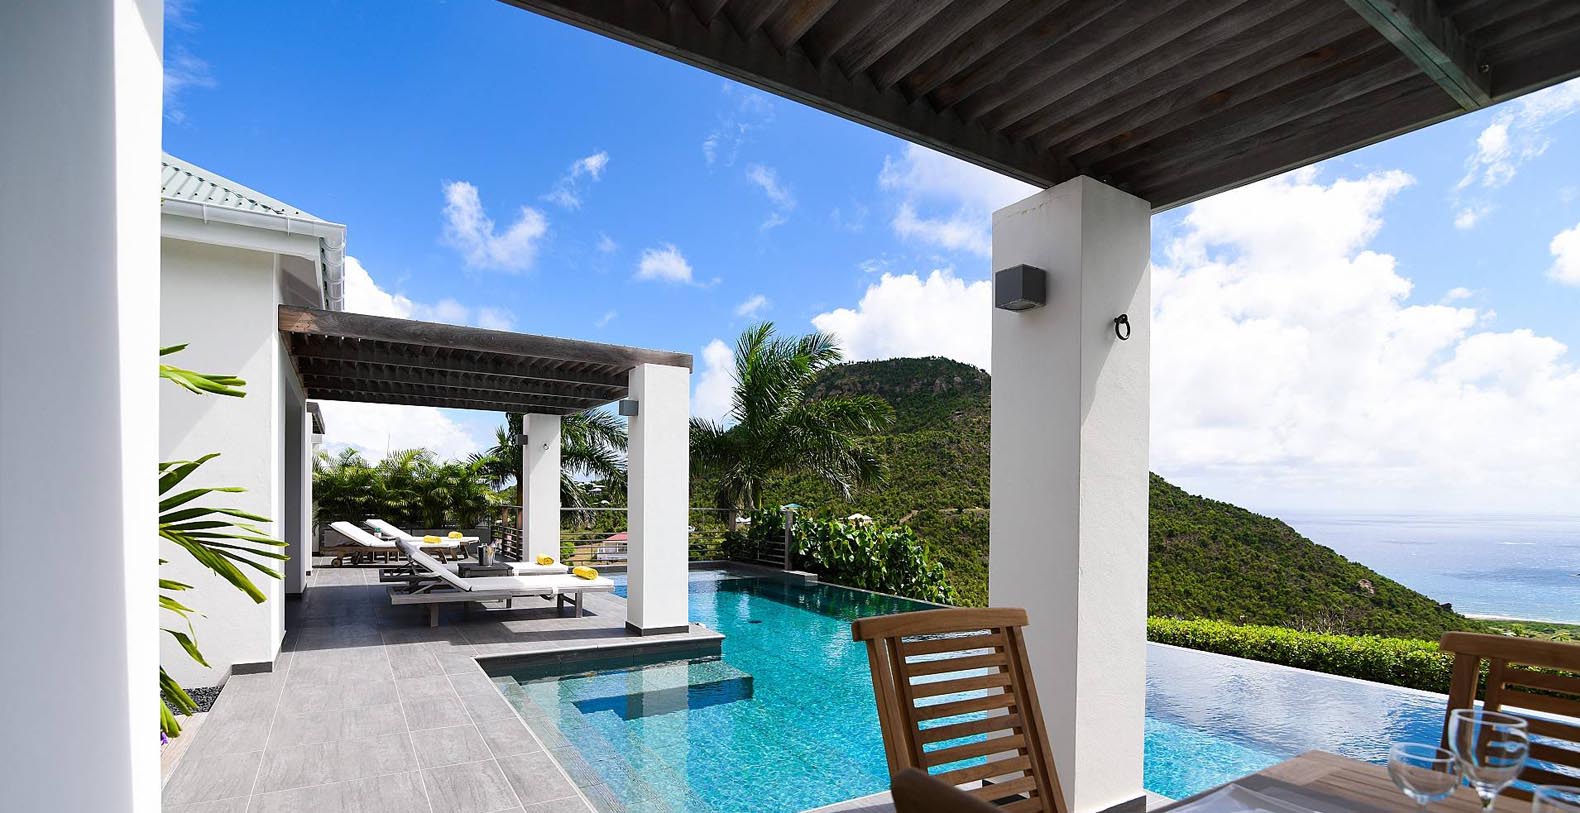 St. Barts Villas for Rent & Luxury Vacation Rentals